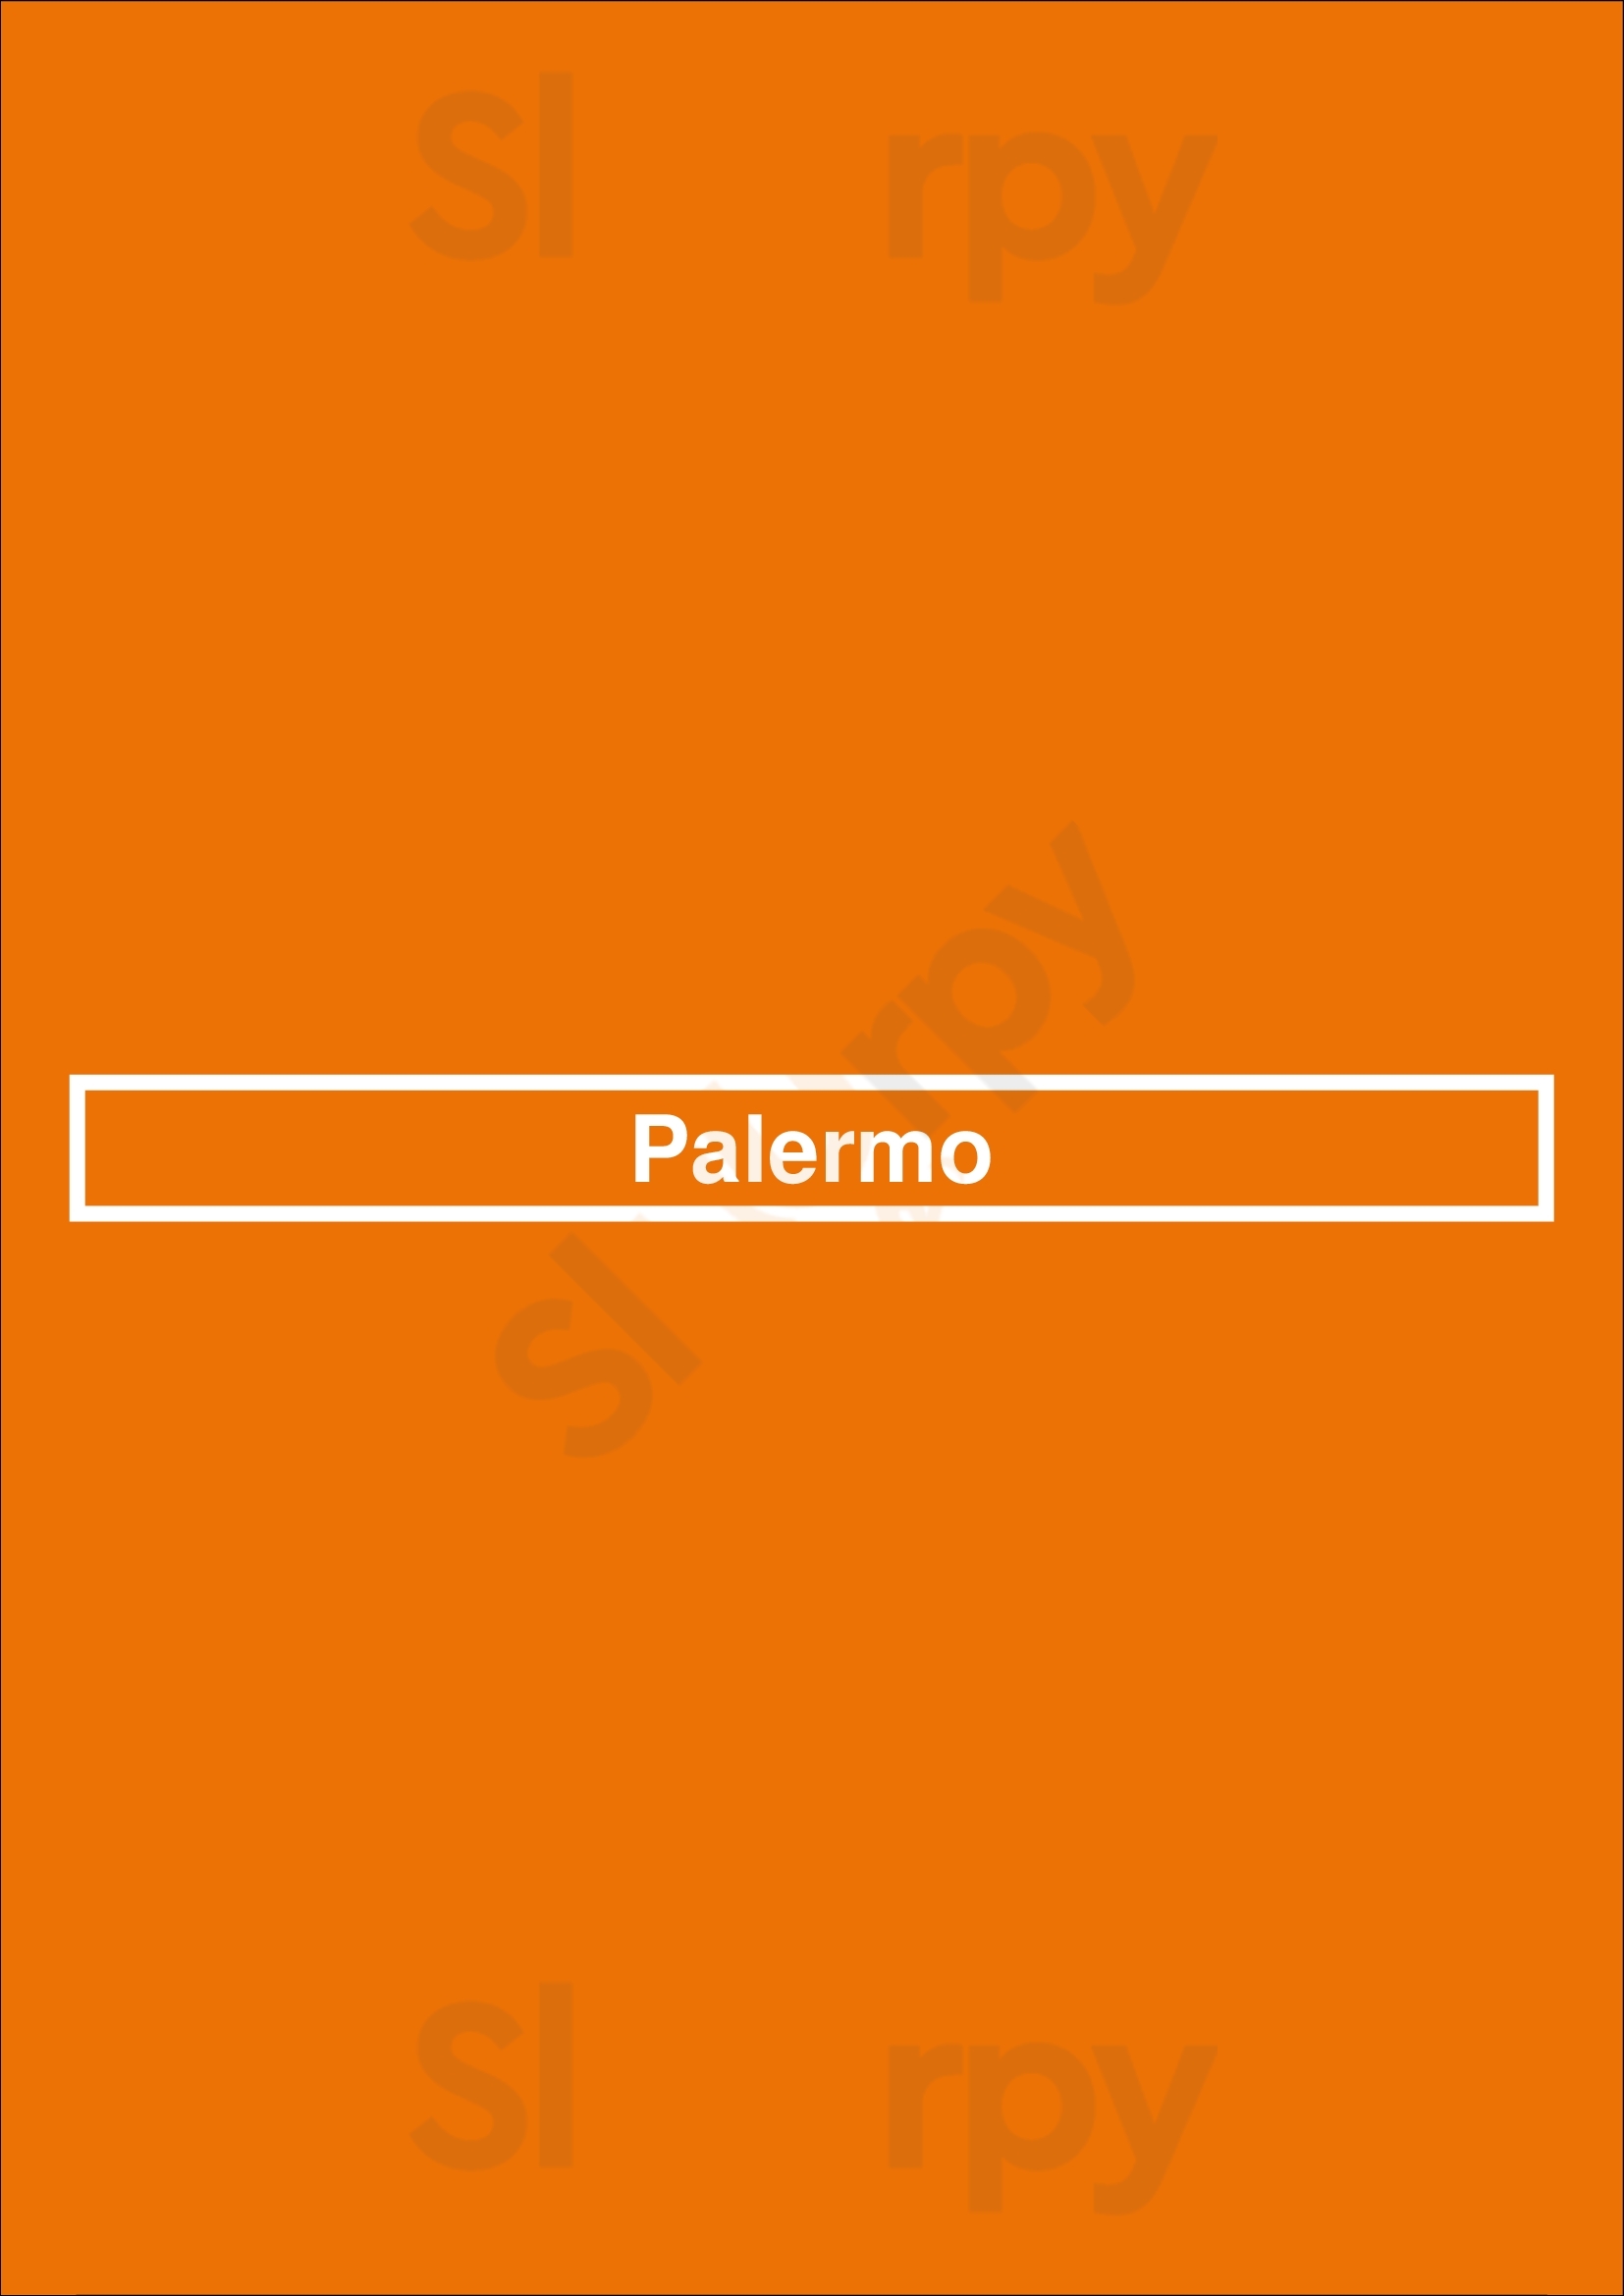 Palermo Paris Menu - 1